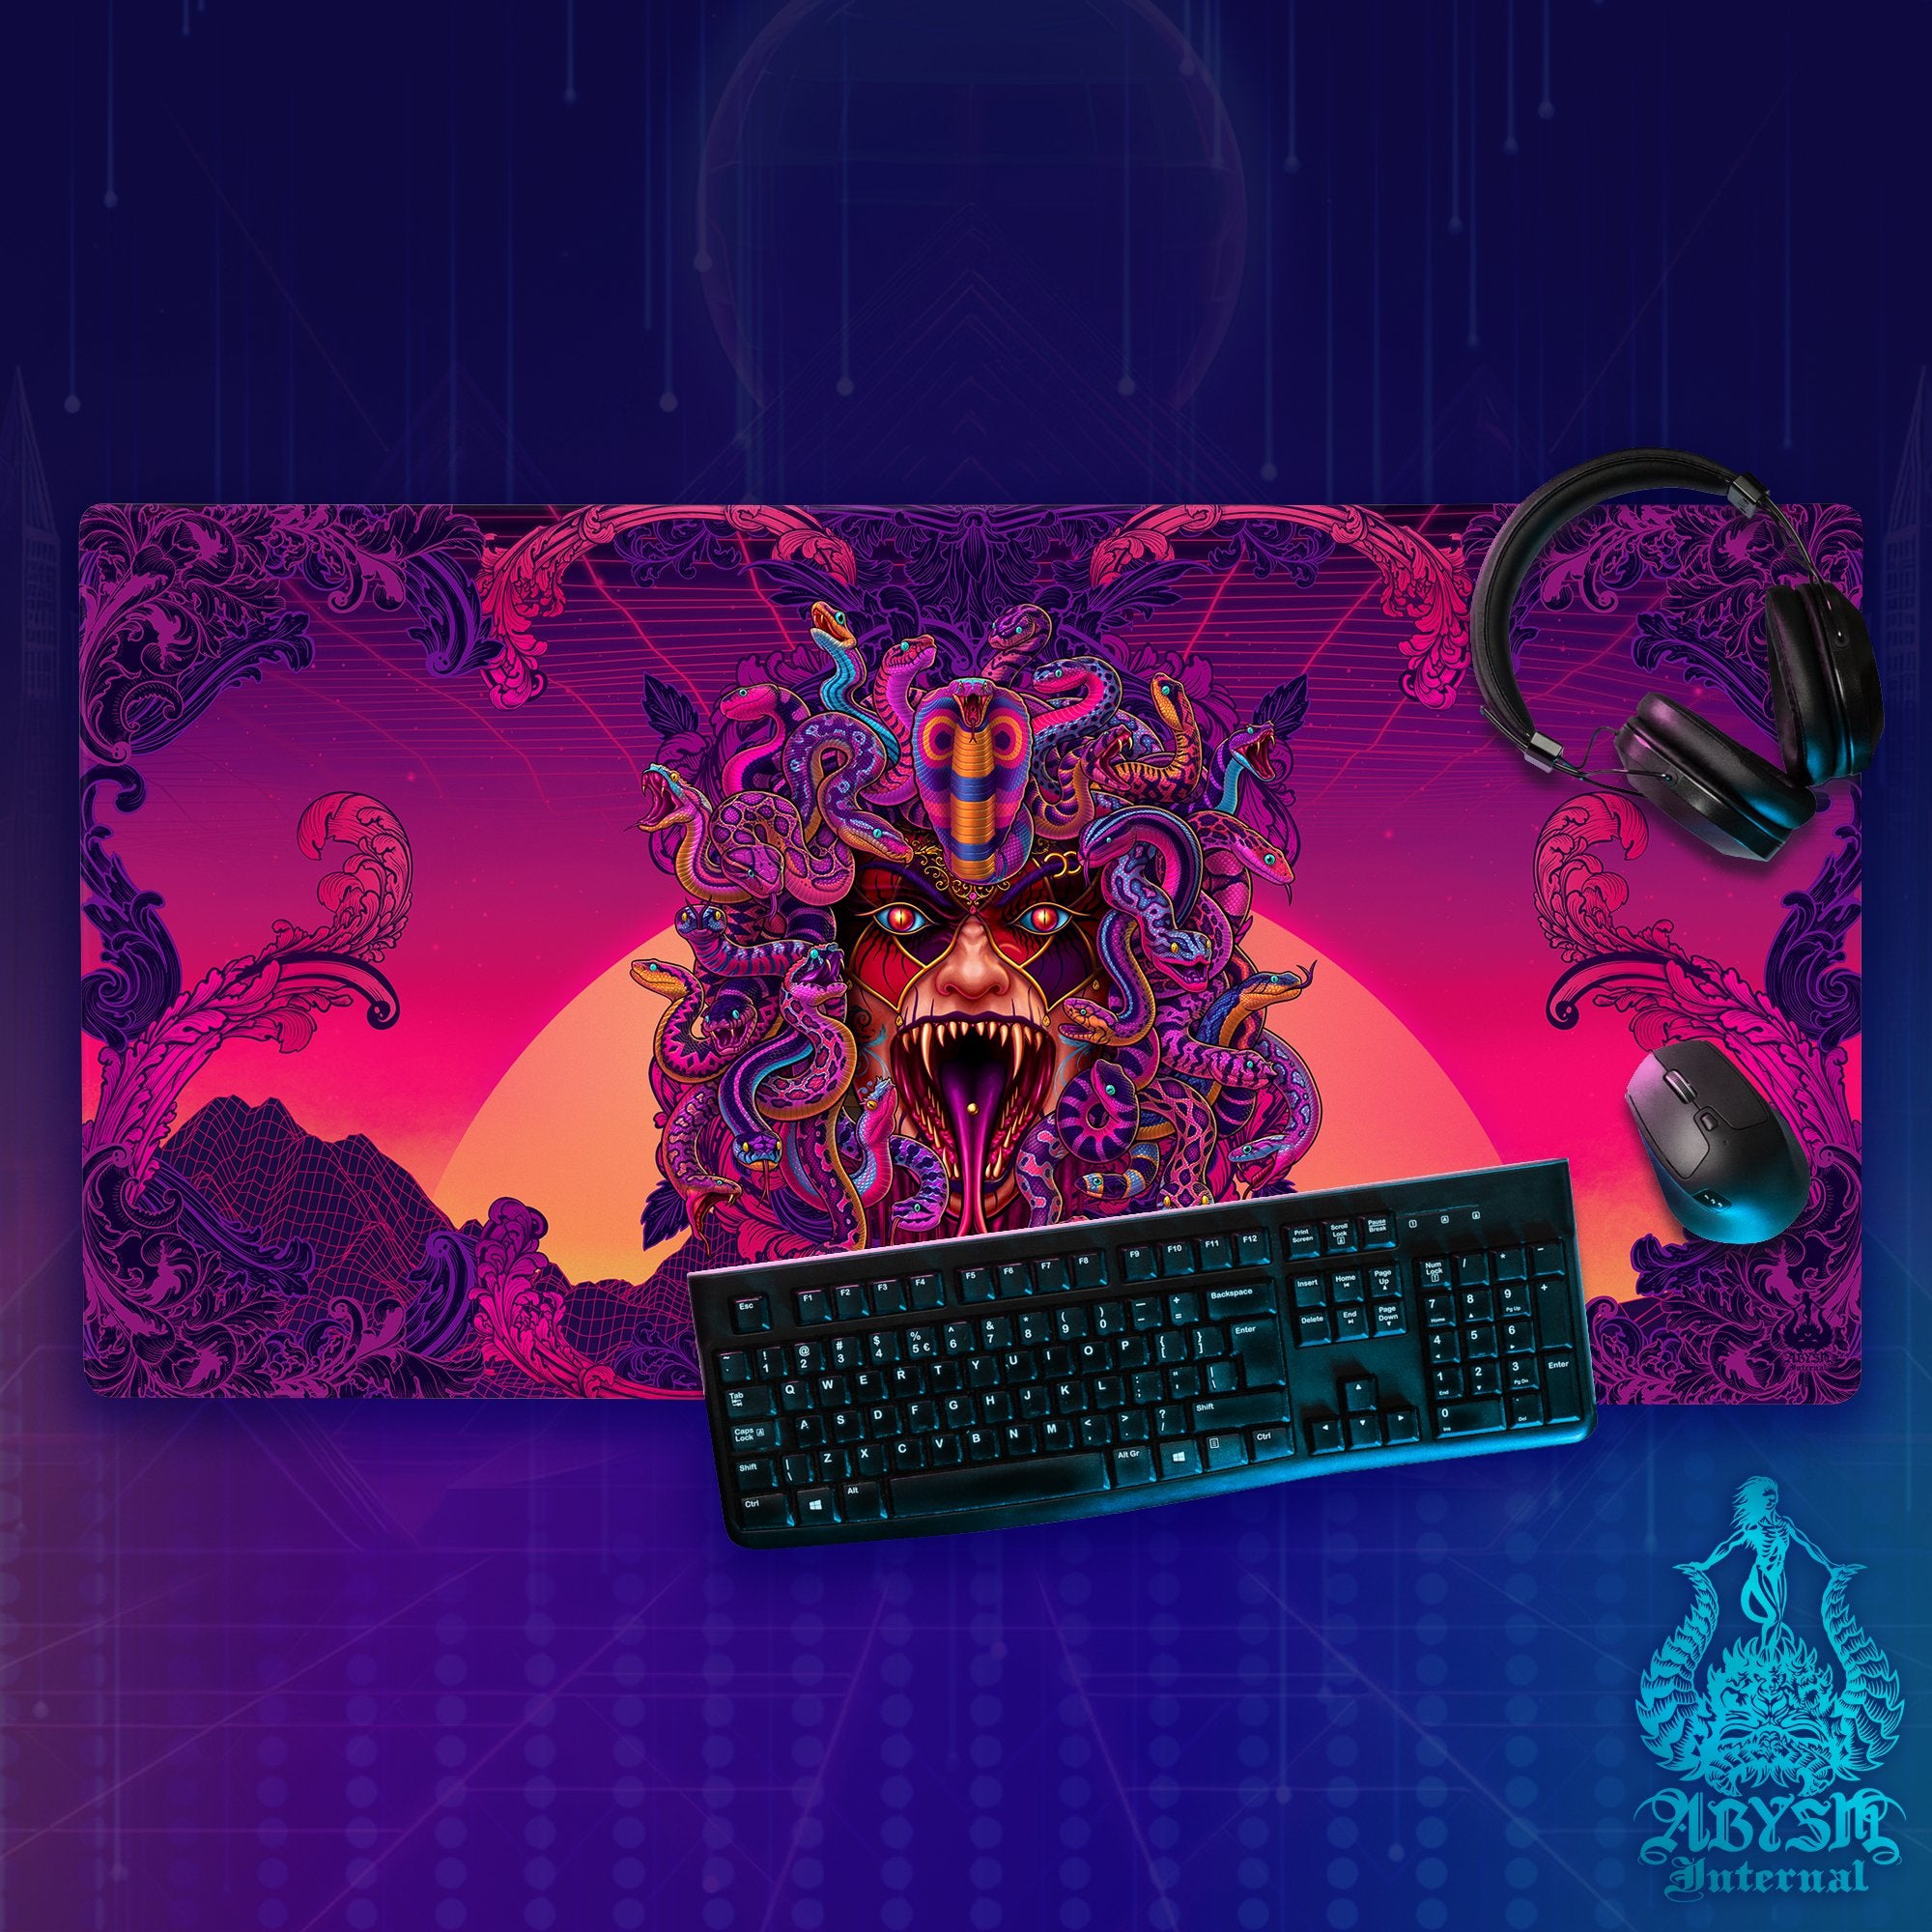 Psychedelic Gaming Mouse Pad, Skull Desk Mat, Gamer Table Protector Cover, Retrowave Medusa Workpad, Fantasy Art Print - Vaporwave, 4 Options - Abysm Internal